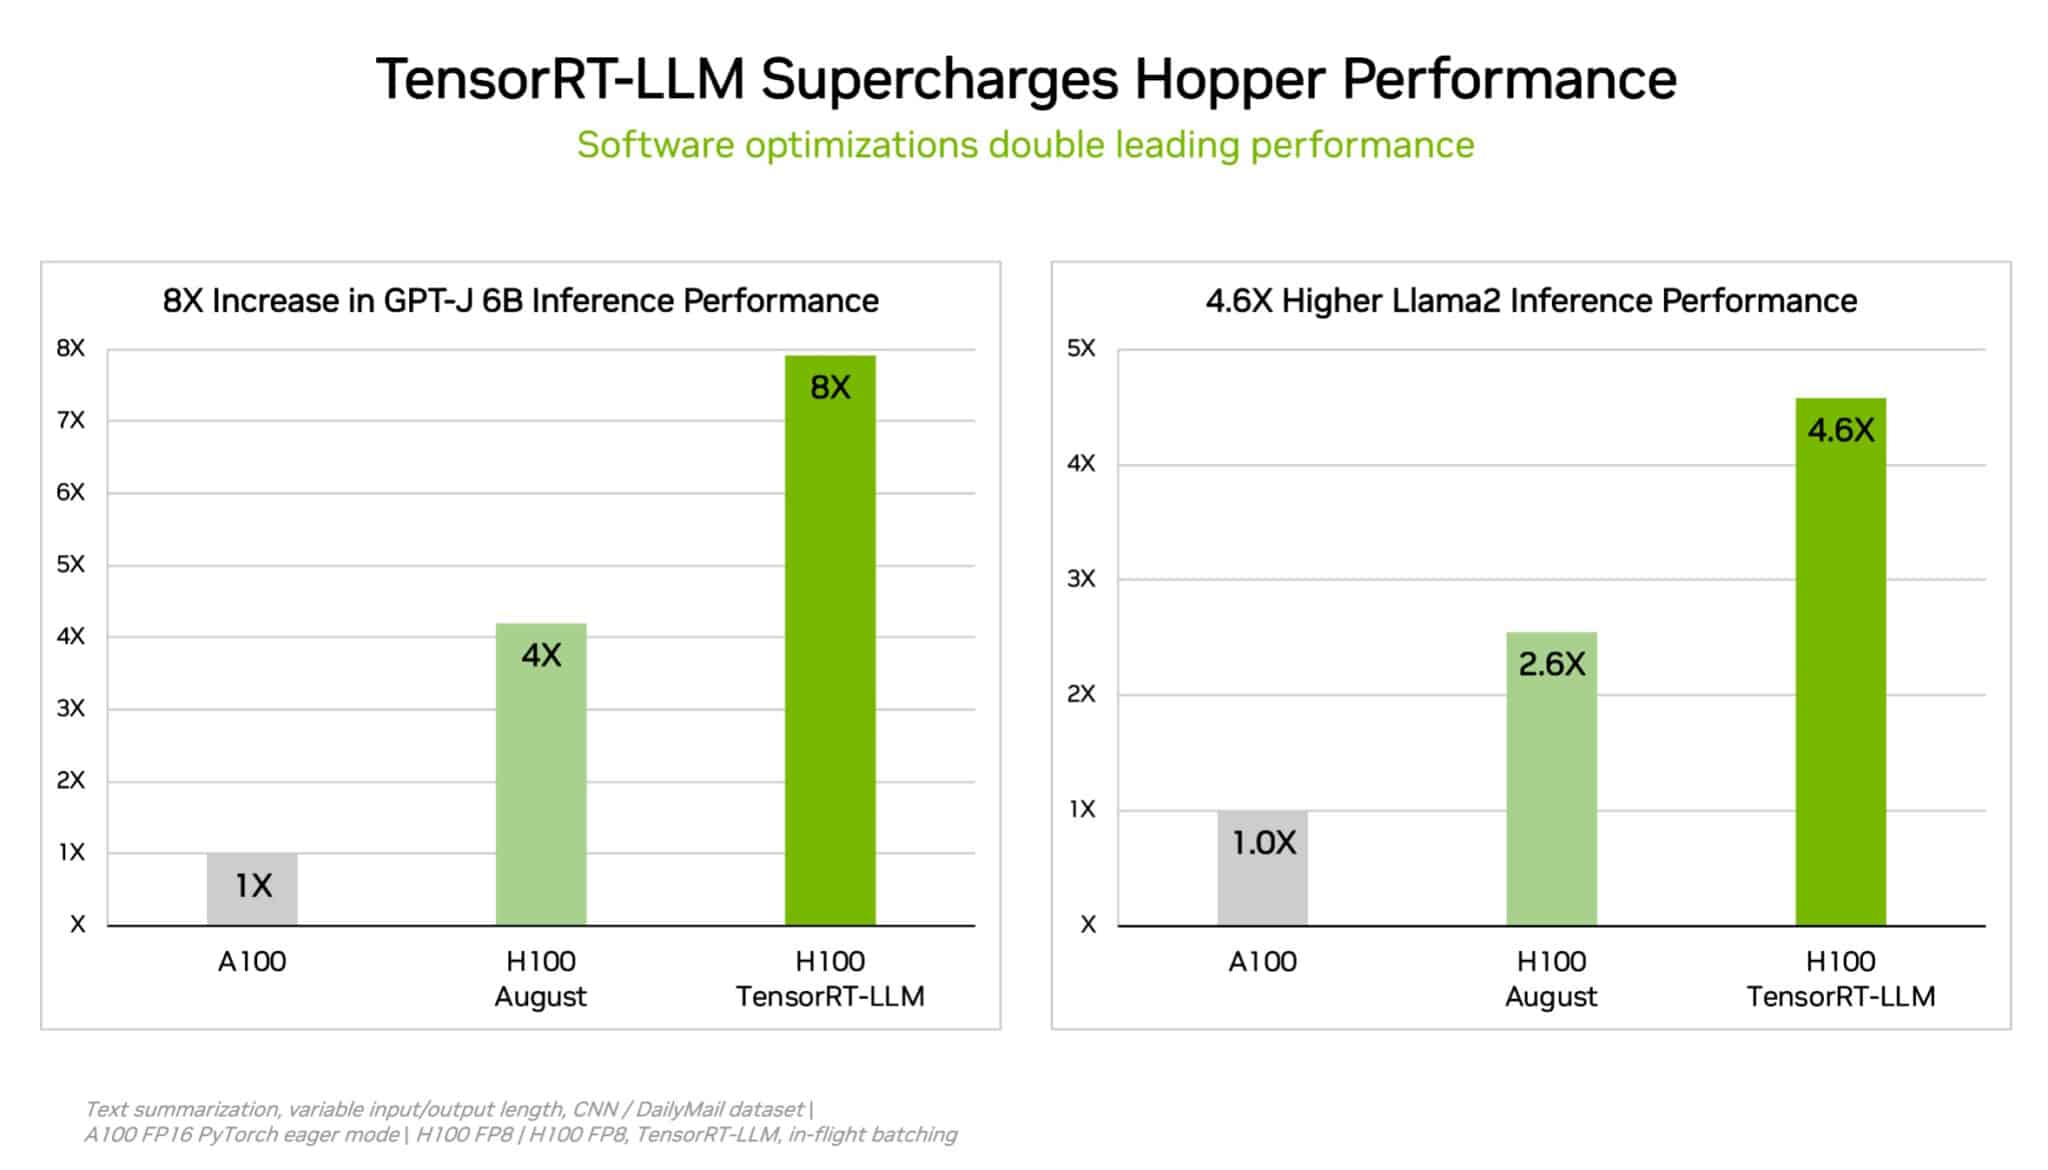 Hopper, Ampere Sweep MLPerf Training Tests